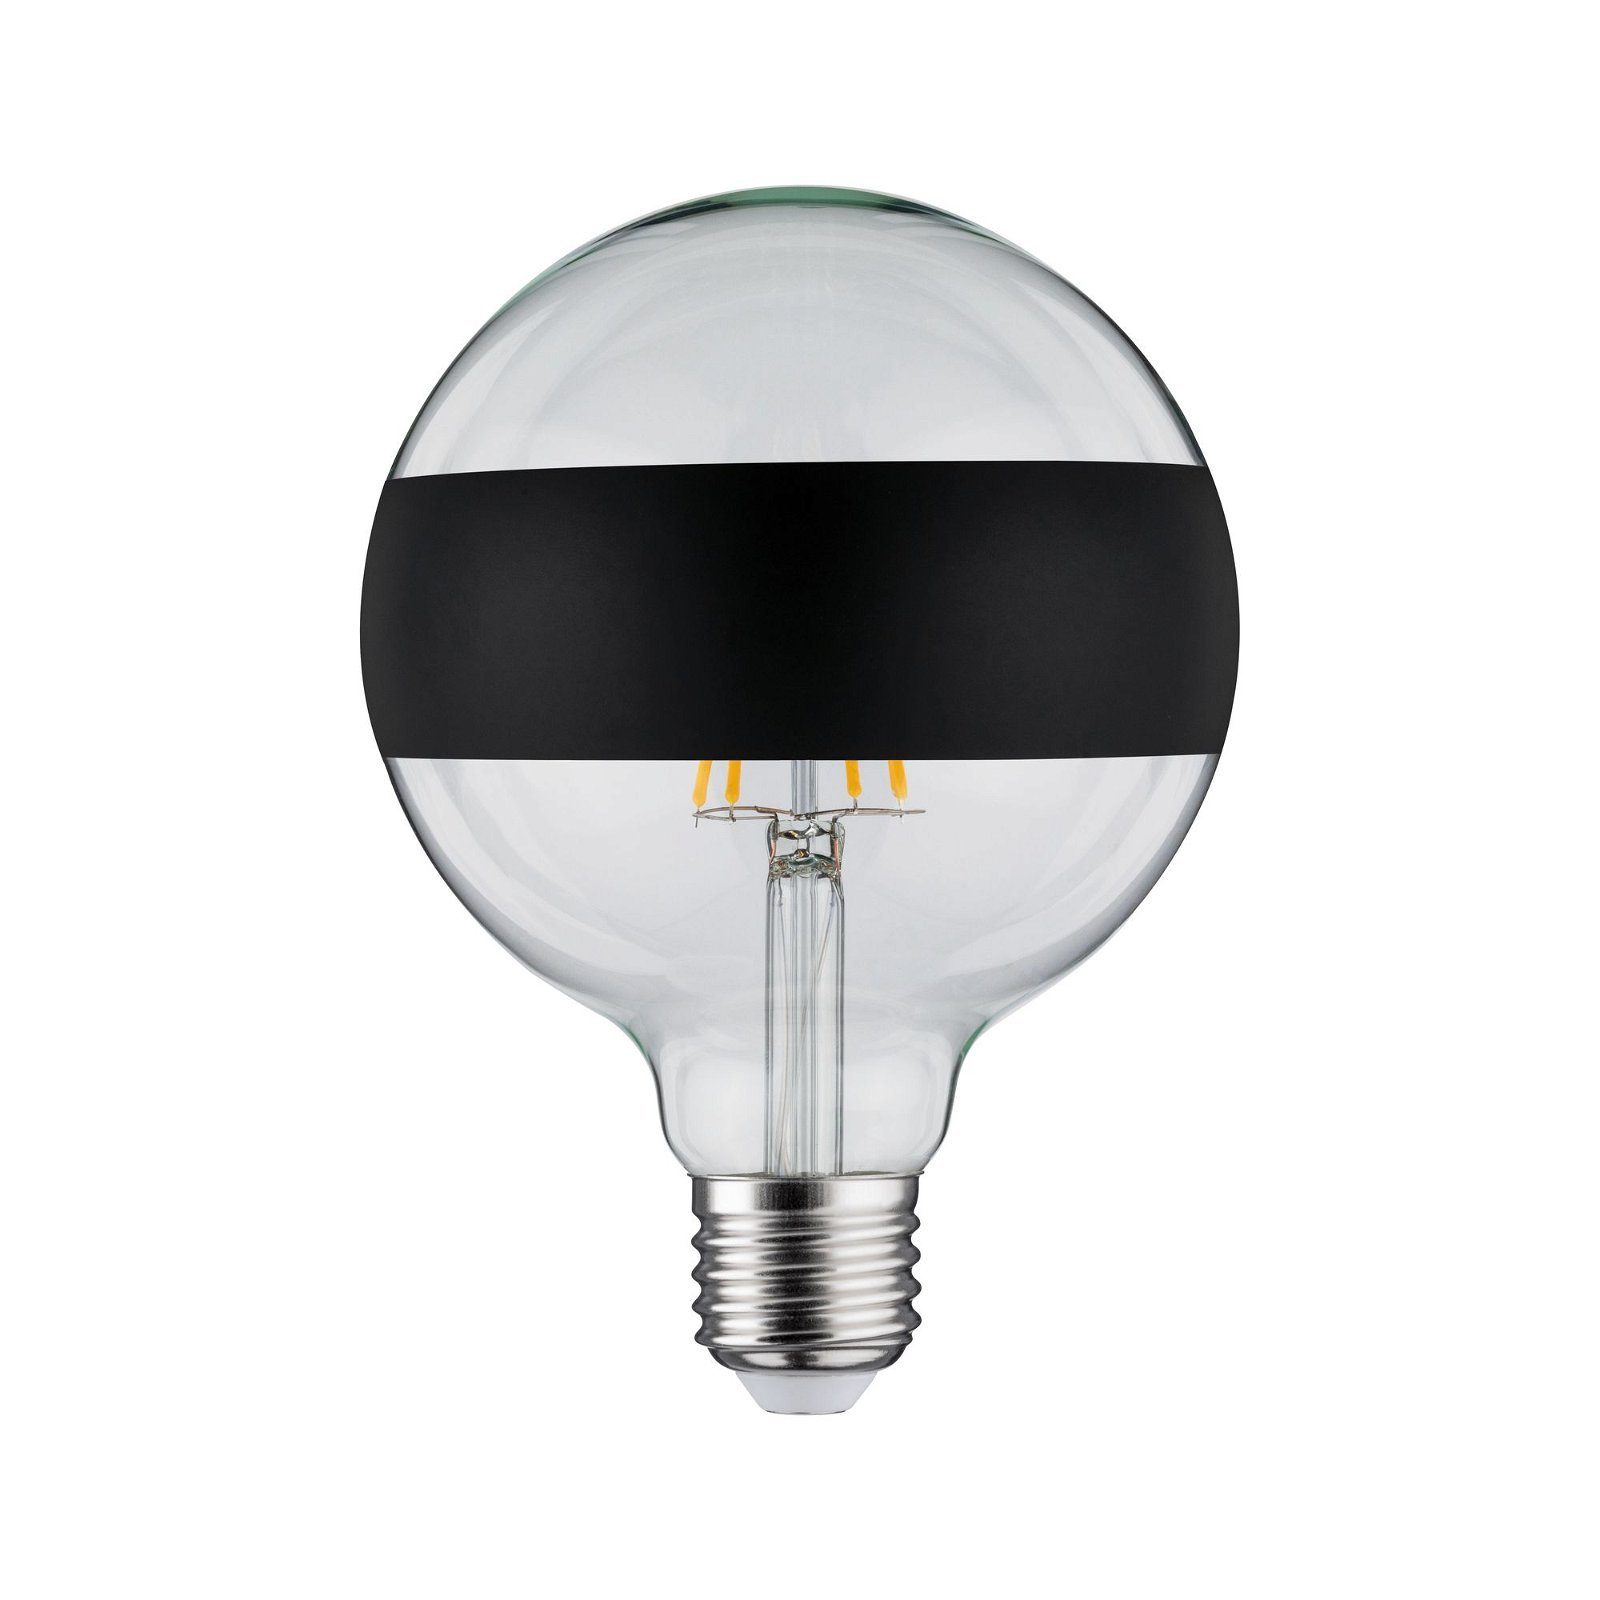 Paulmann LED-Leuchtmittel G125 Ringspiegel 640lm 2700K 6,5W 230V schwarz matt, 1 St., Warmweiß